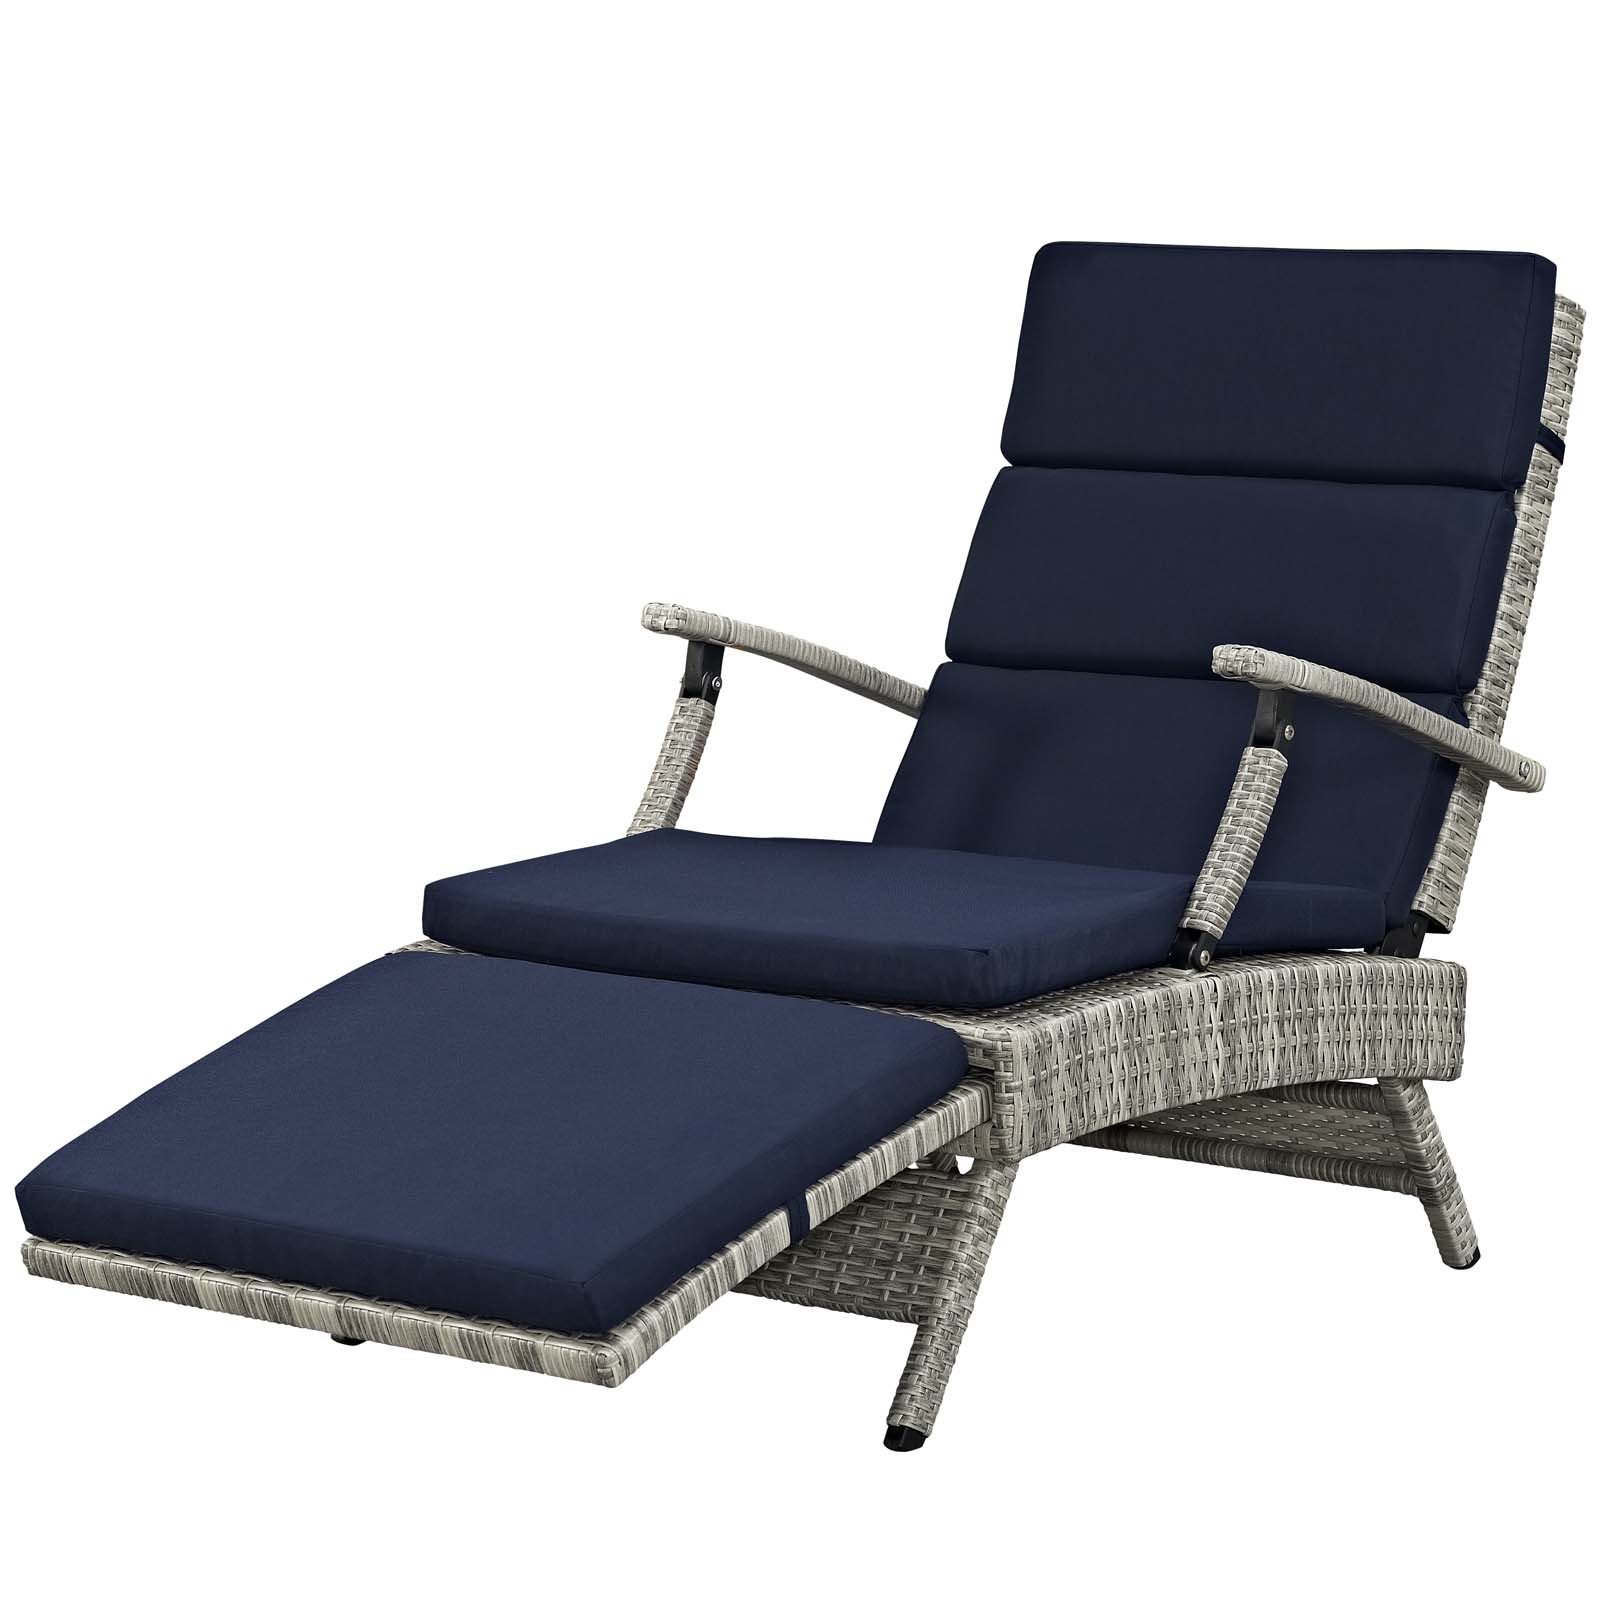 Contemporary Modern Urban Designer Outdoor Patio Balcony Garden Furniture Lounge Chair Chaise, Fabric Rattan Wicker, Navy Blue - image 3 of 9